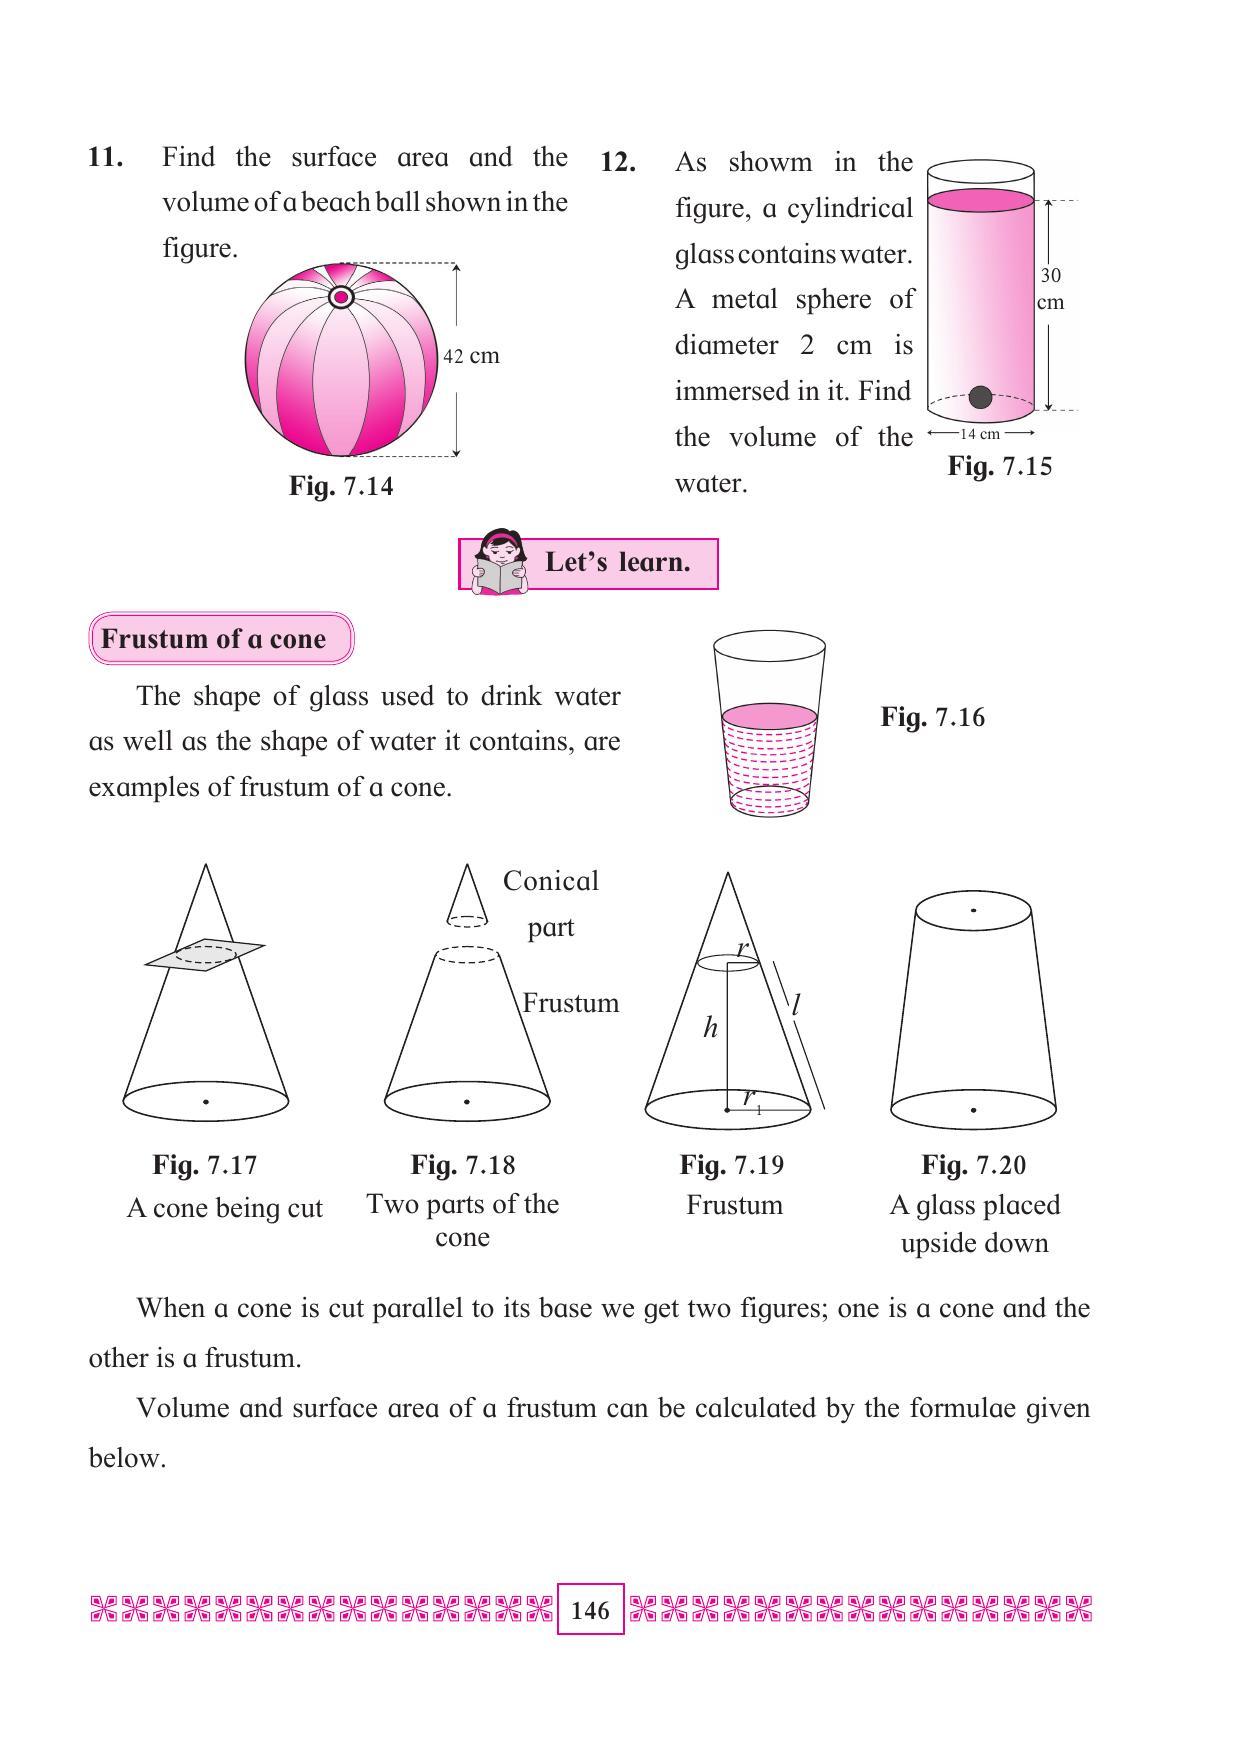 Maharashtra Board Class 10 Maths (Part 2) Textbook - Page 156